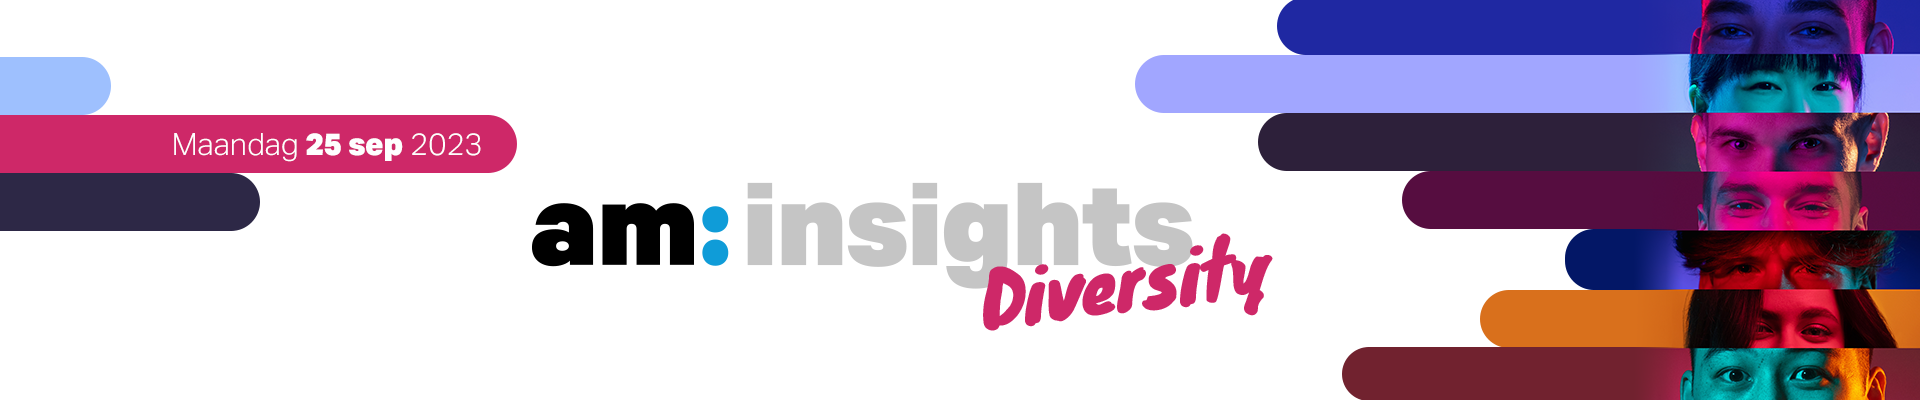 AM Insights - Diversity